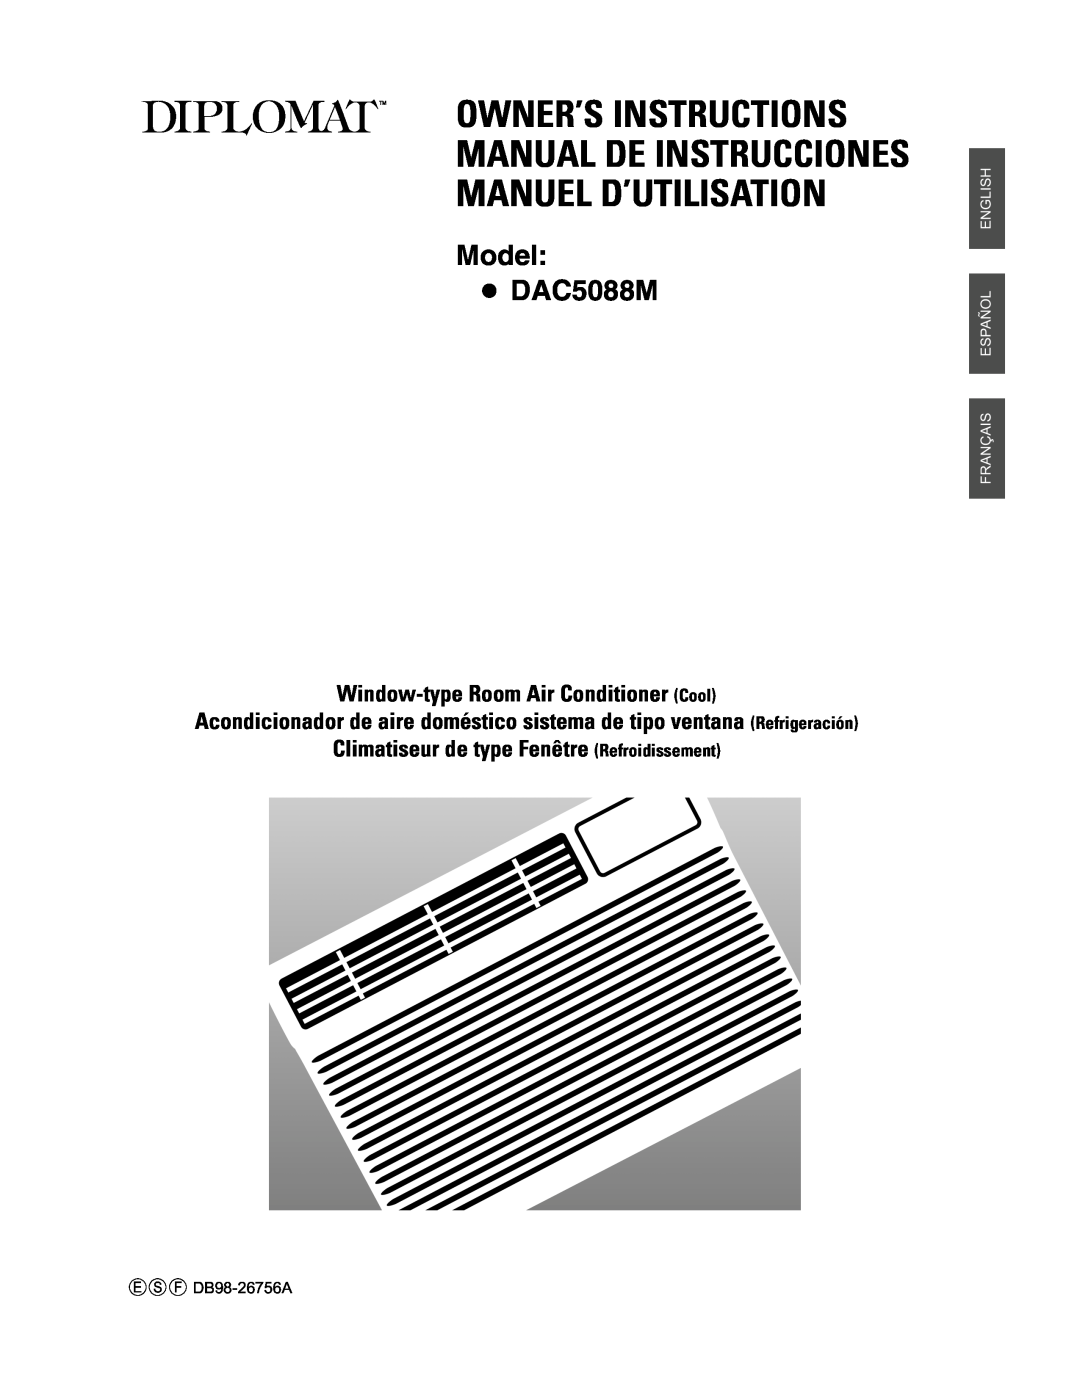 Danby manuel dutilisation Model DAC5088M, E S F DB98-26756A, Window-typeRoom Air Conditioner Cool, Italiano 